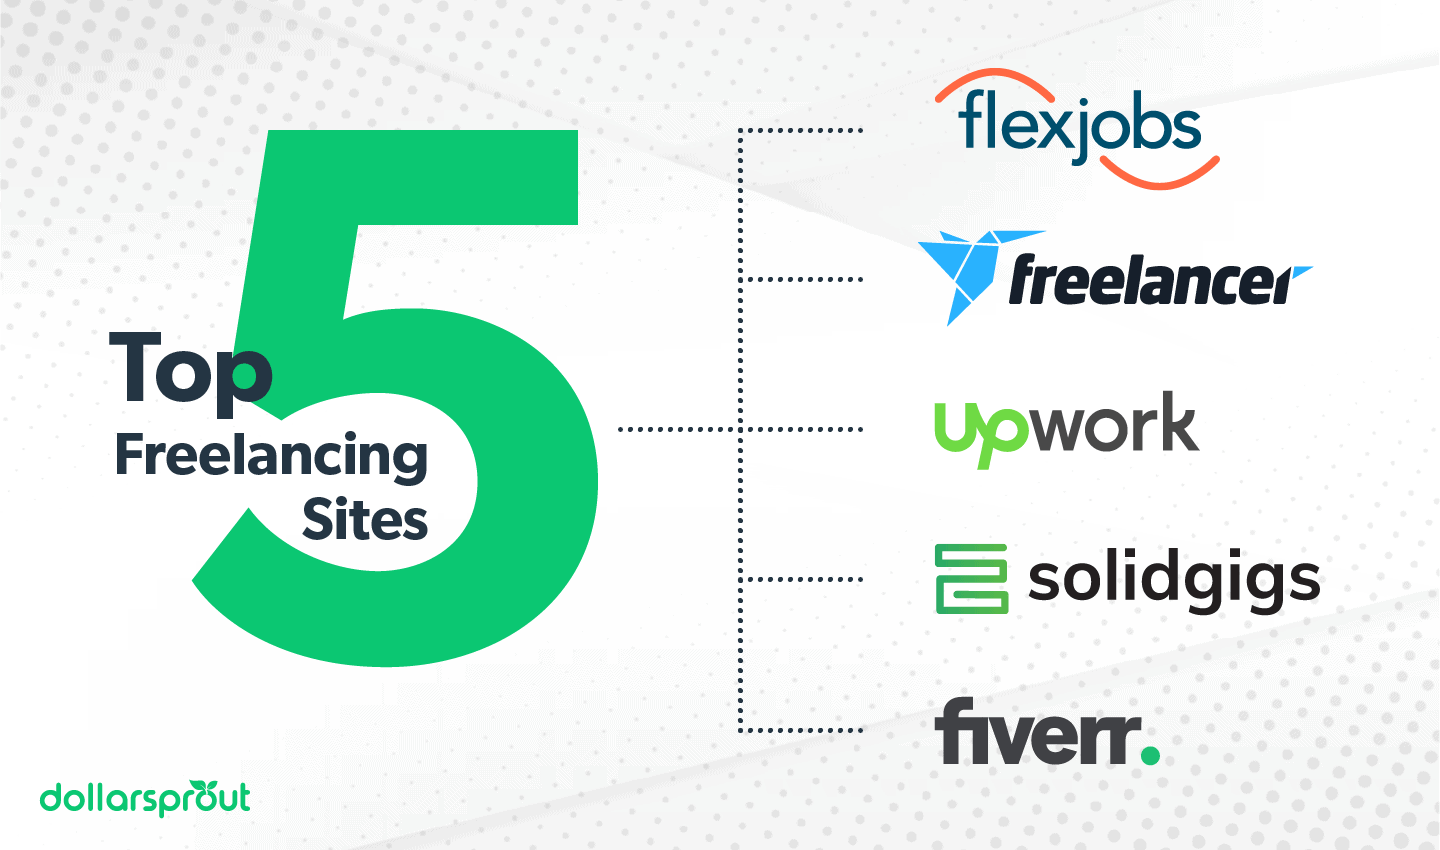 Top 5 Freelancing Sites